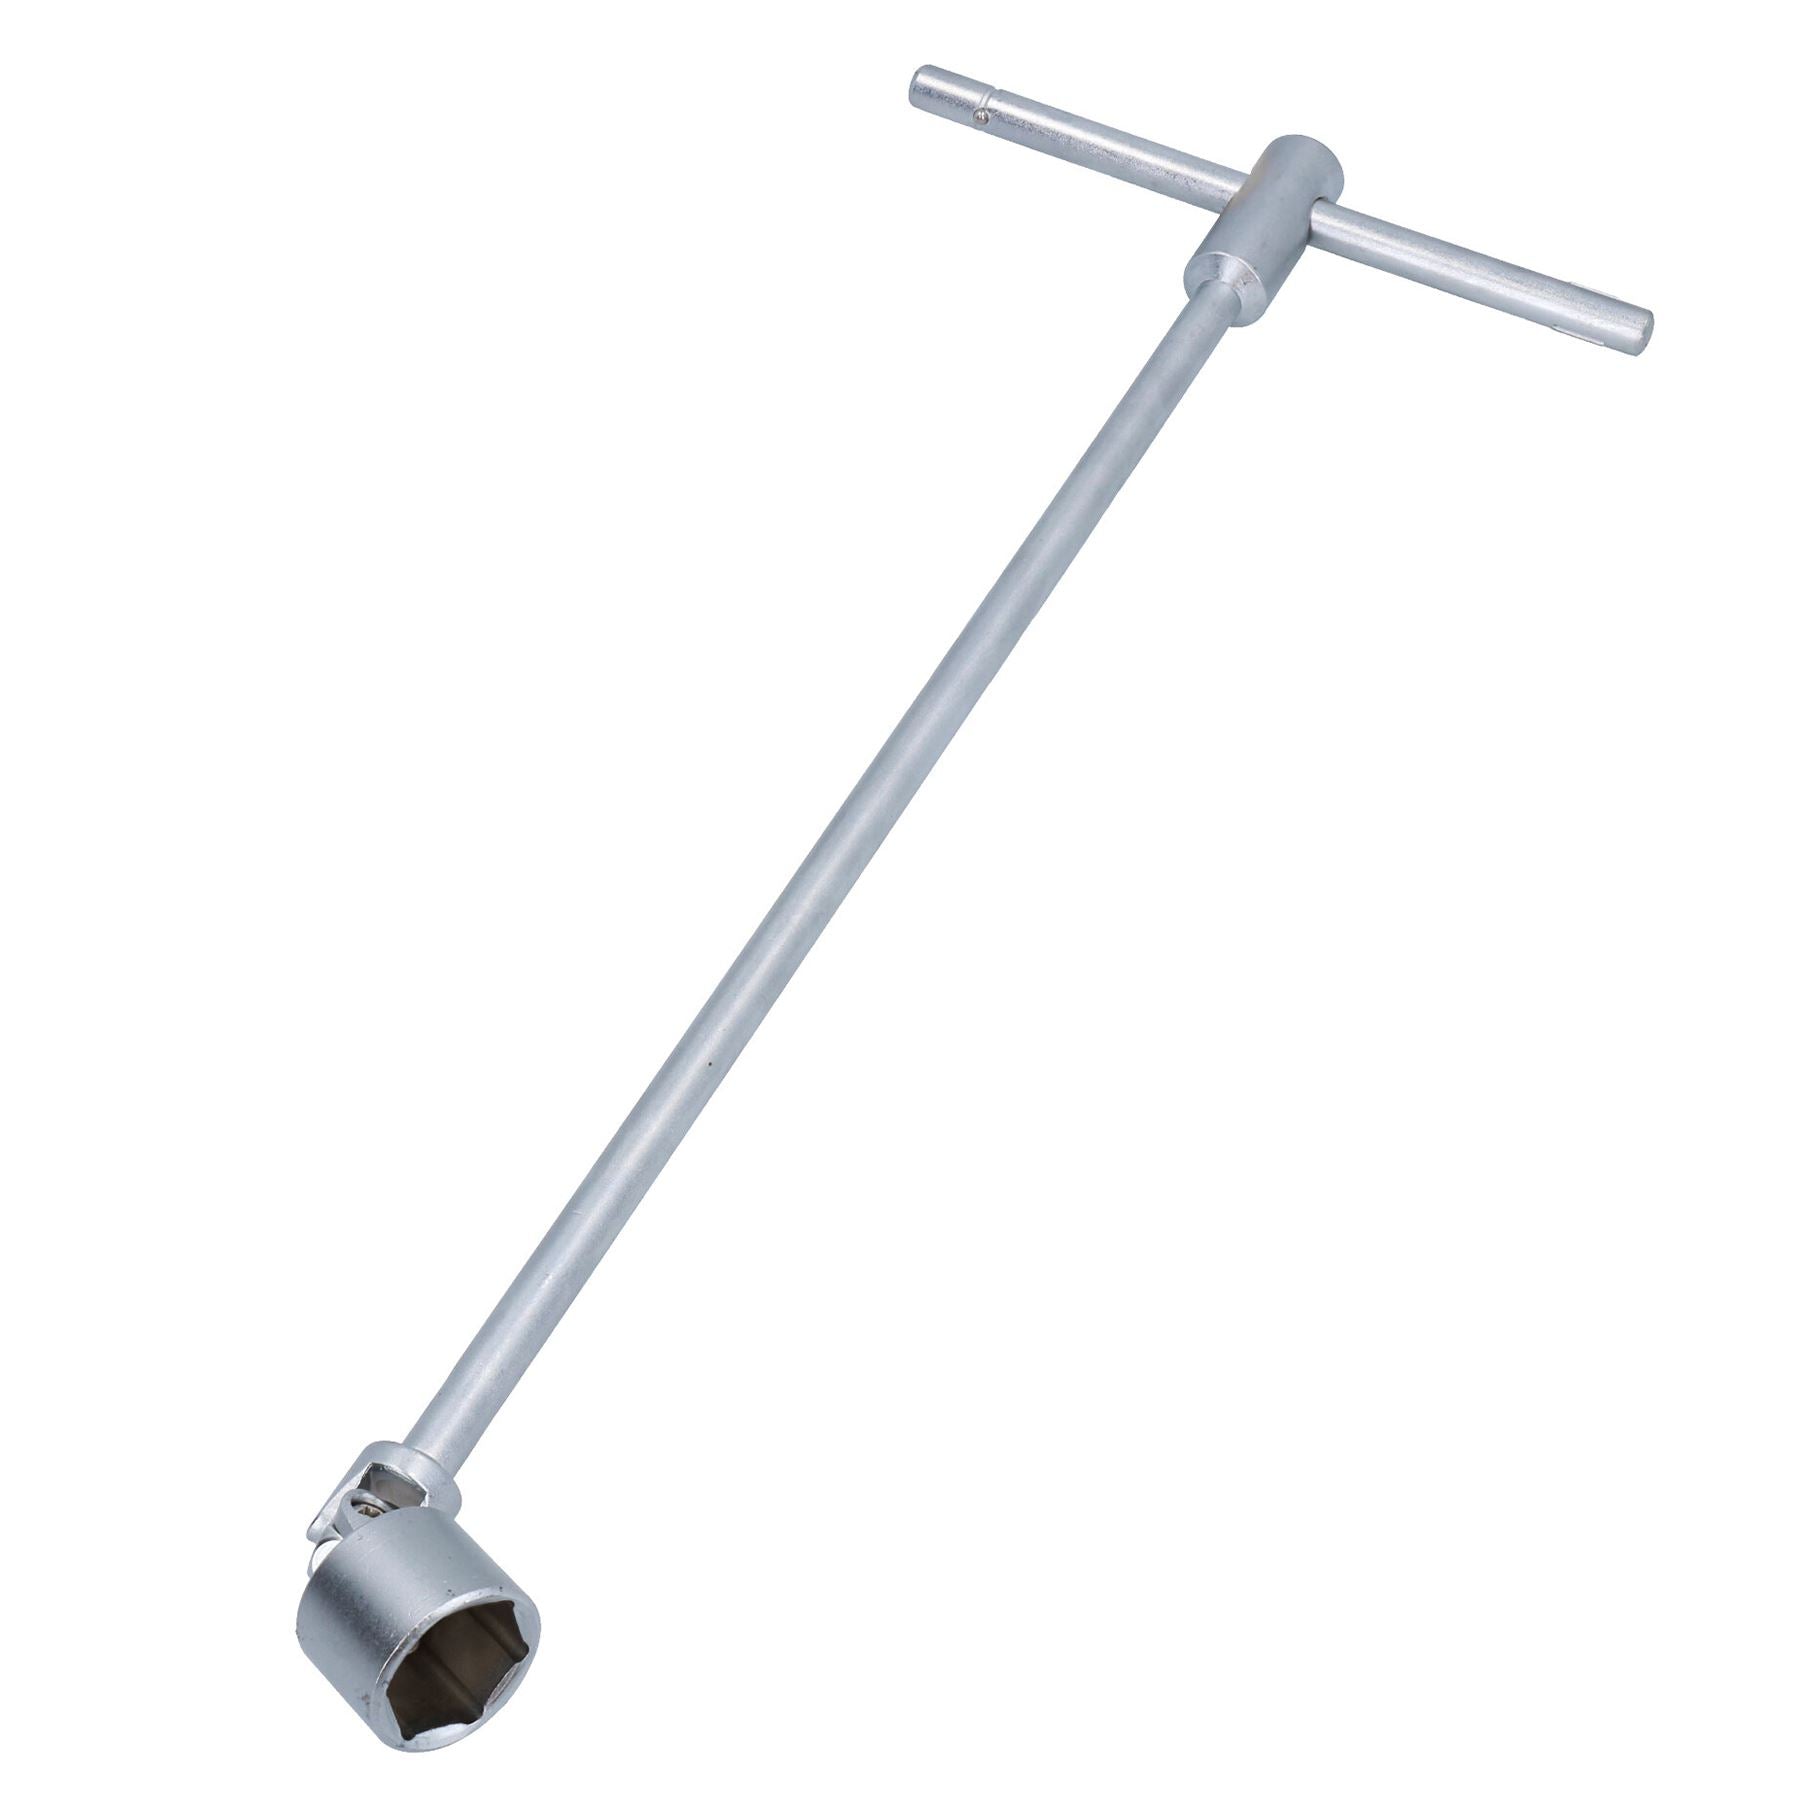 22mm Metric UJ Universal Joint T Bar Sockets Spanner Nut Spinner Wrench